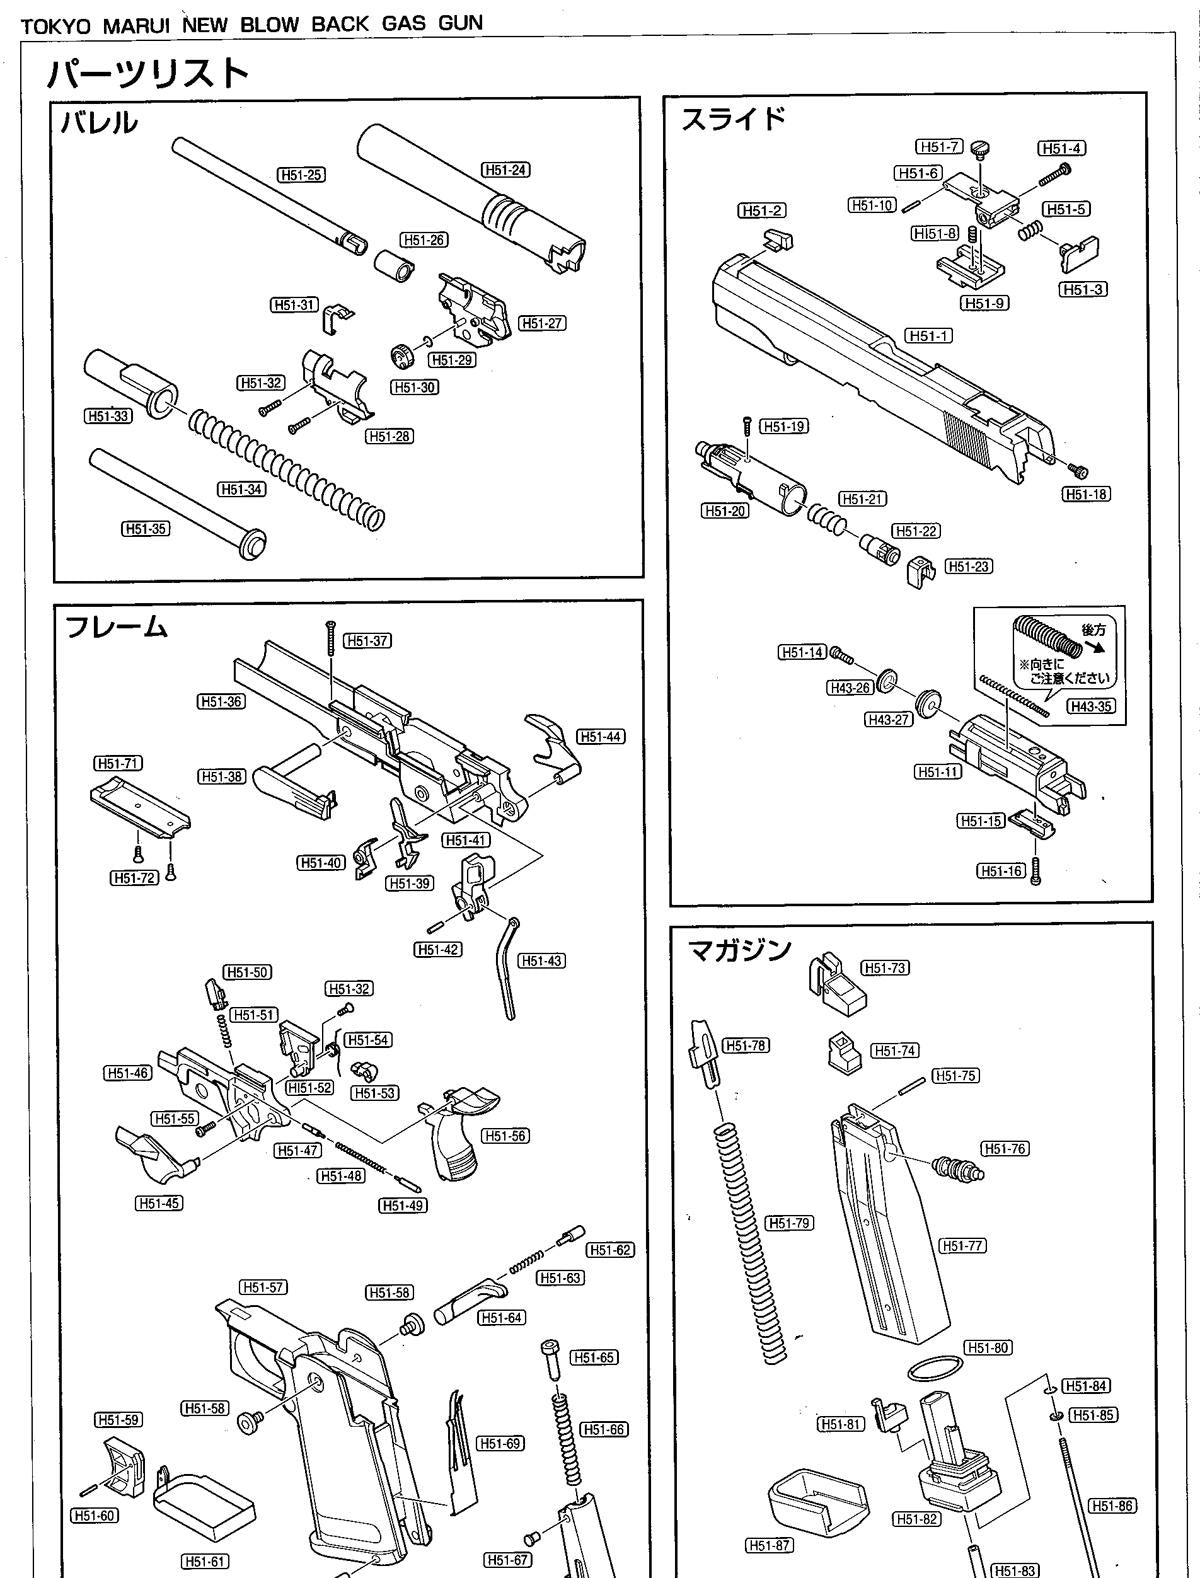 Tokyo Marui Hi-Capa - Replacement PartH43-8 - Recoil Spring Guide Plug